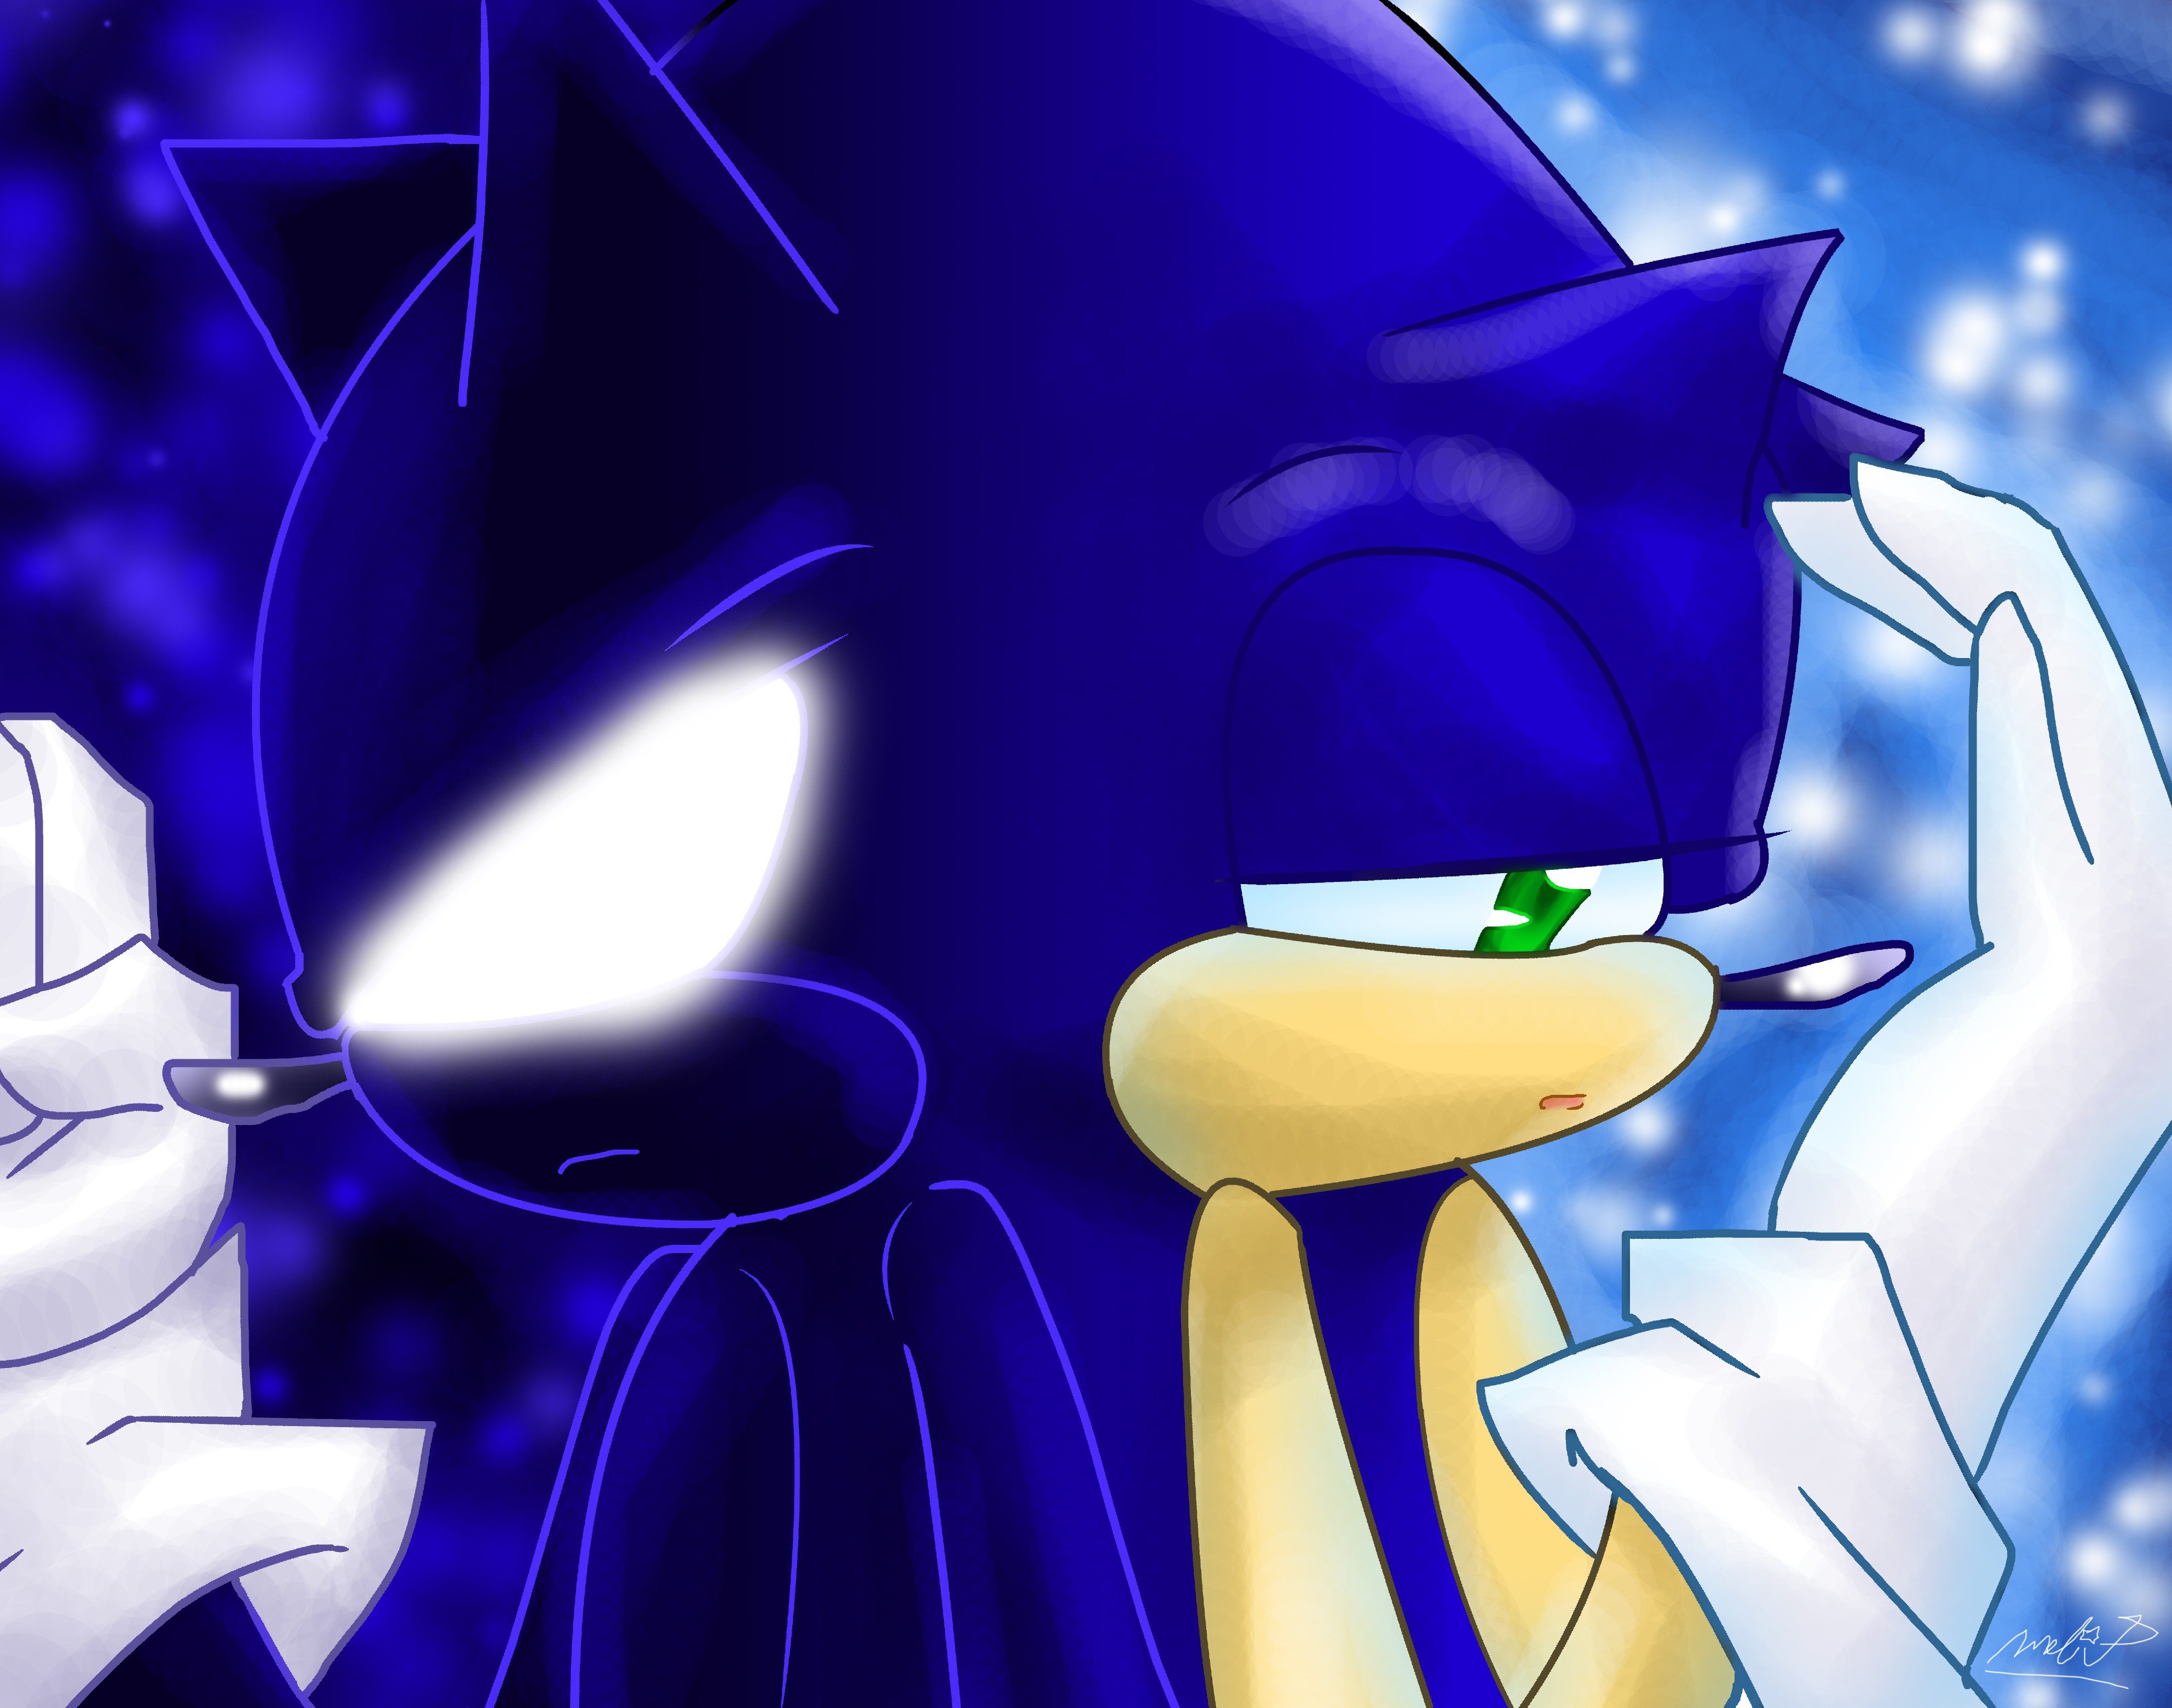 Sonic, Sonic the Hedgehog Wallpaper